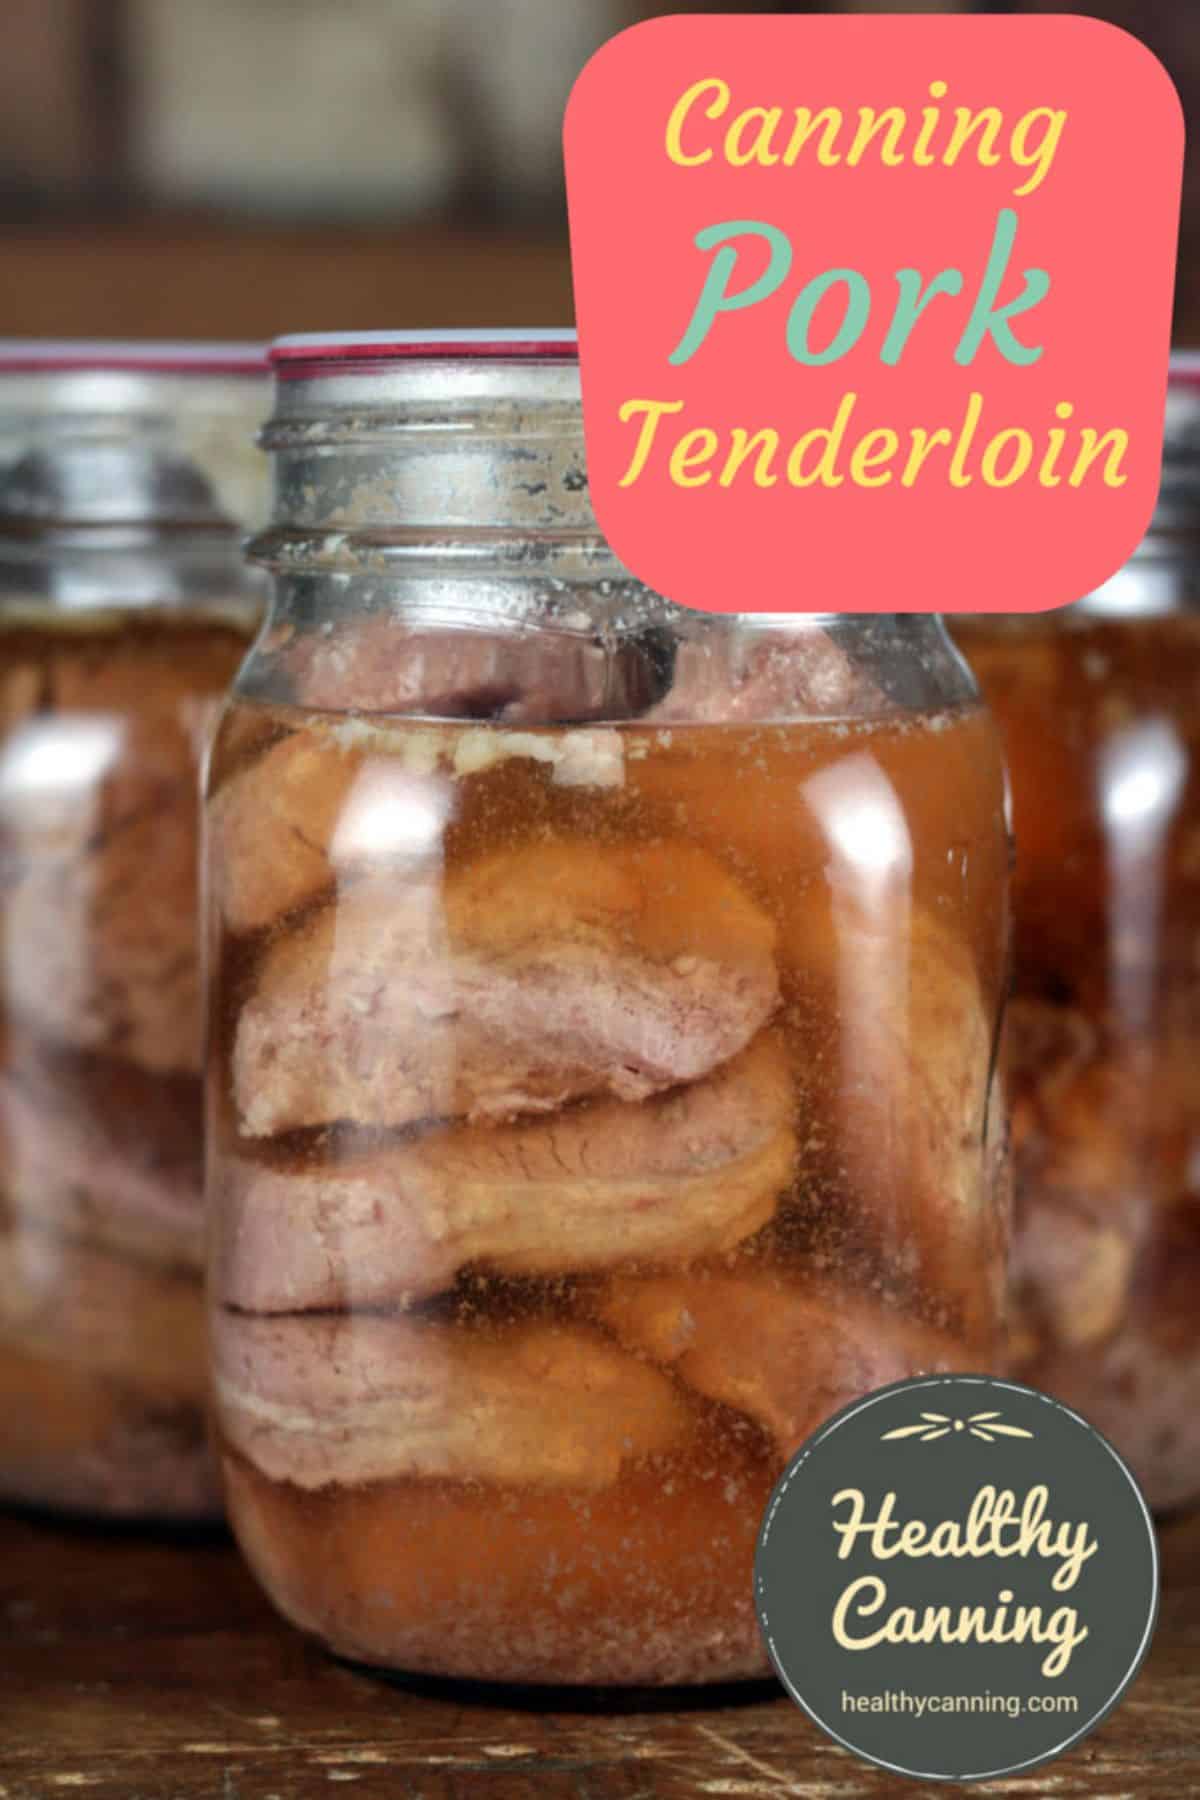 Canned pork tenderloin in glass jars.